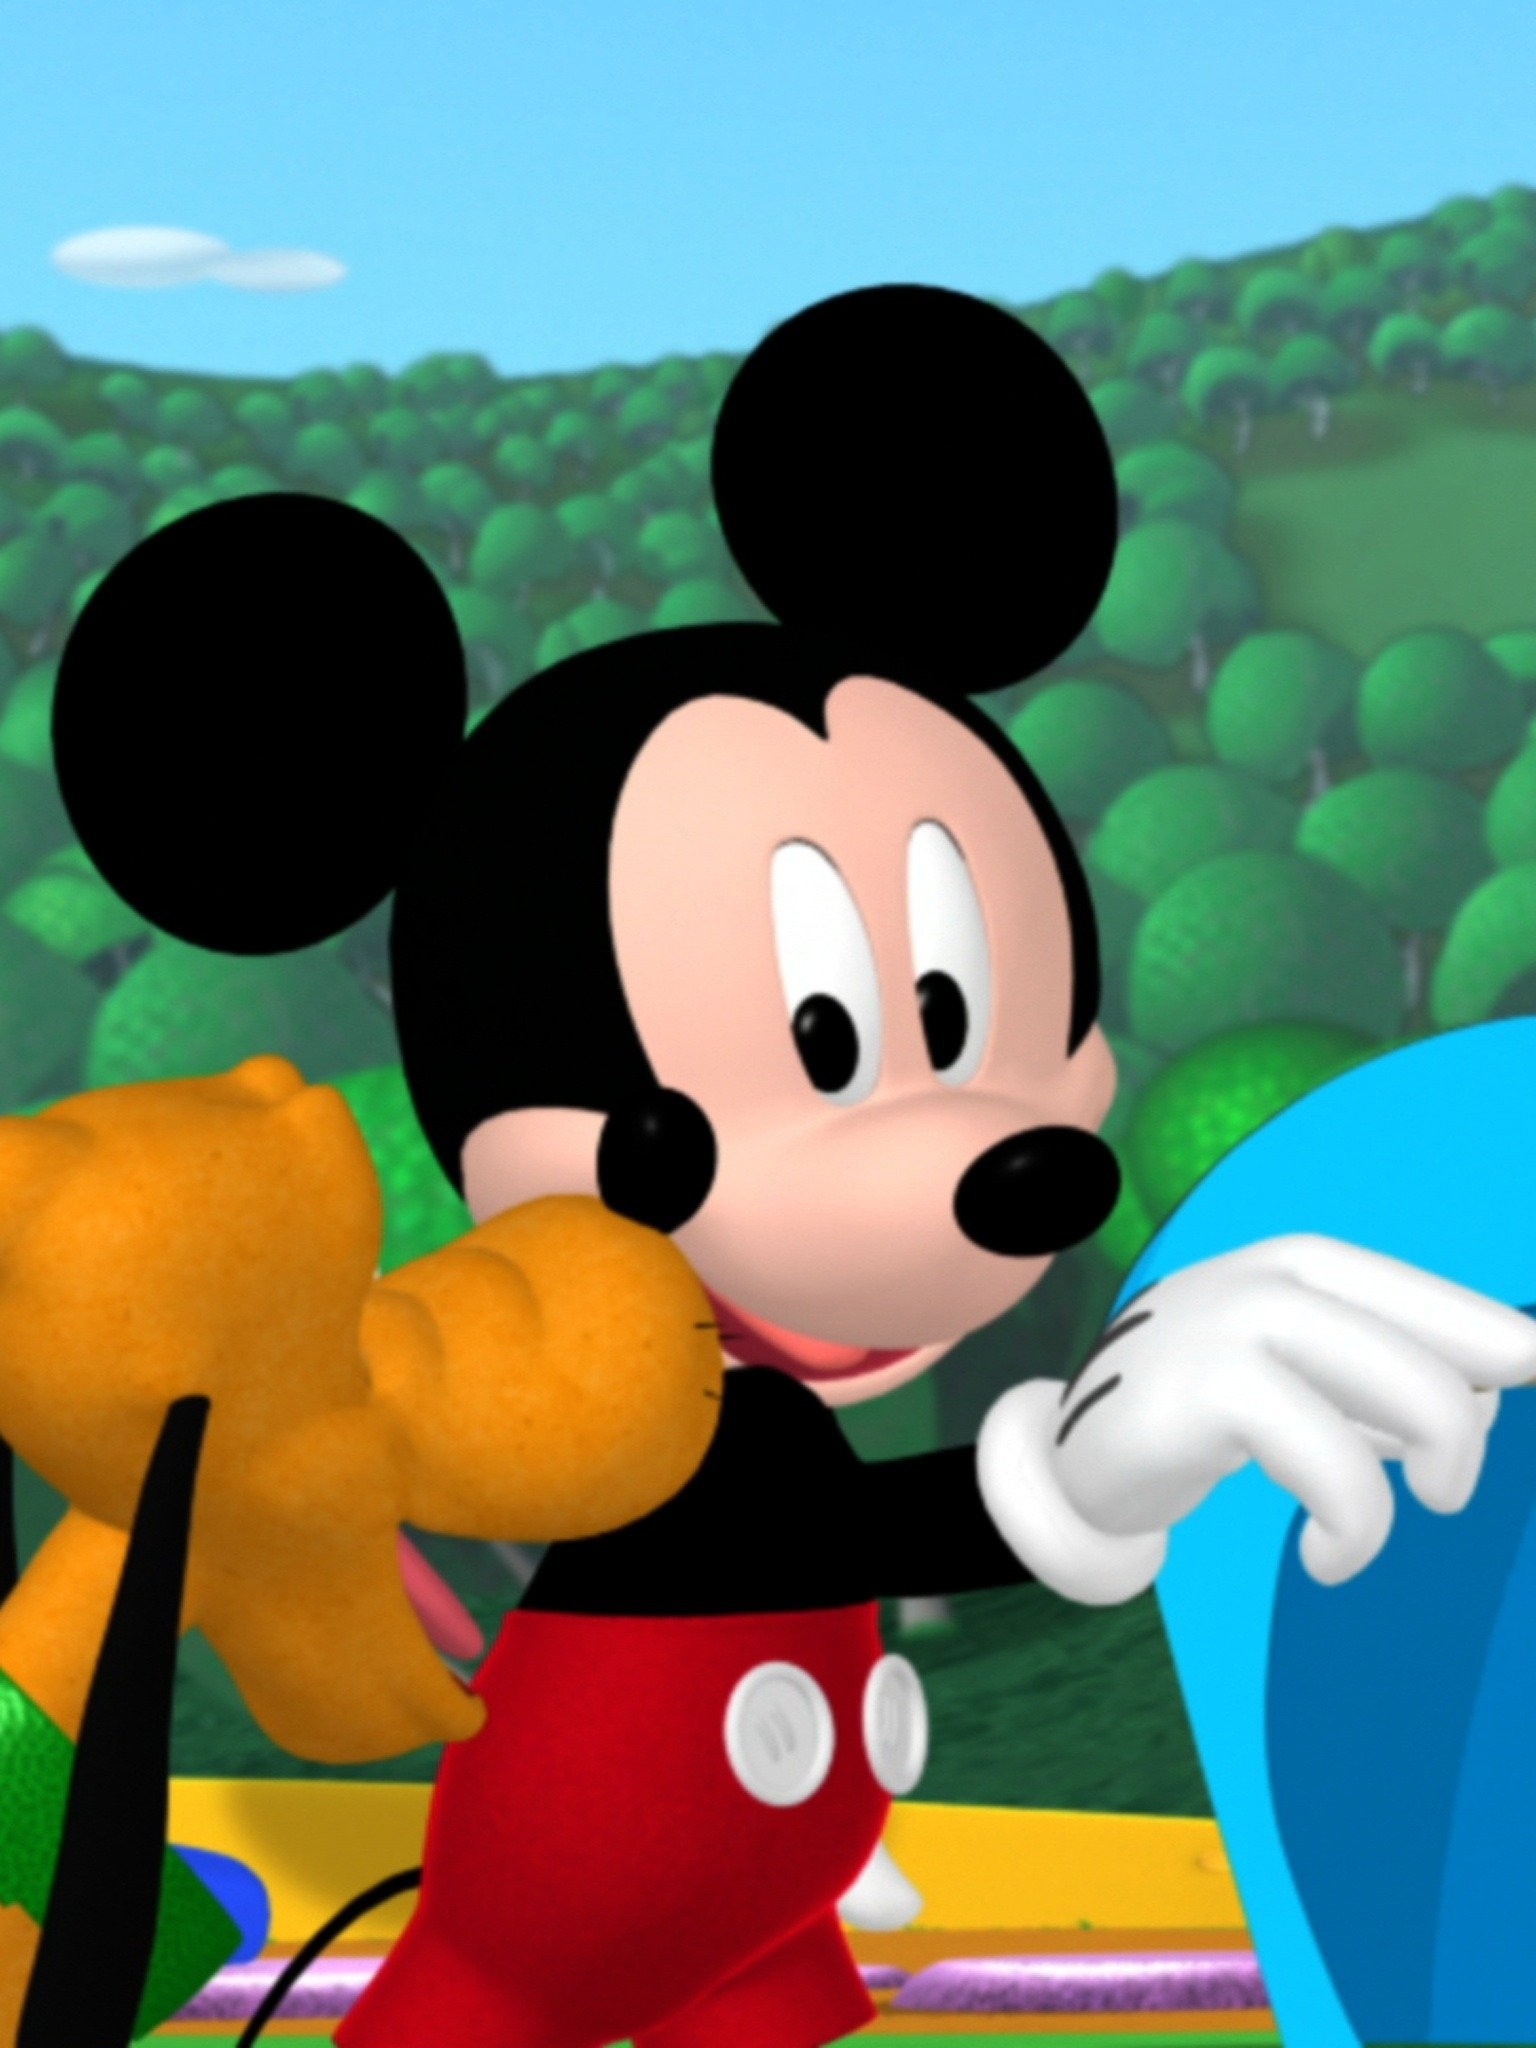 Pluto's Ball - Mickey Mouse Clubhouse (Season 1, Episode 12) - Apple TV